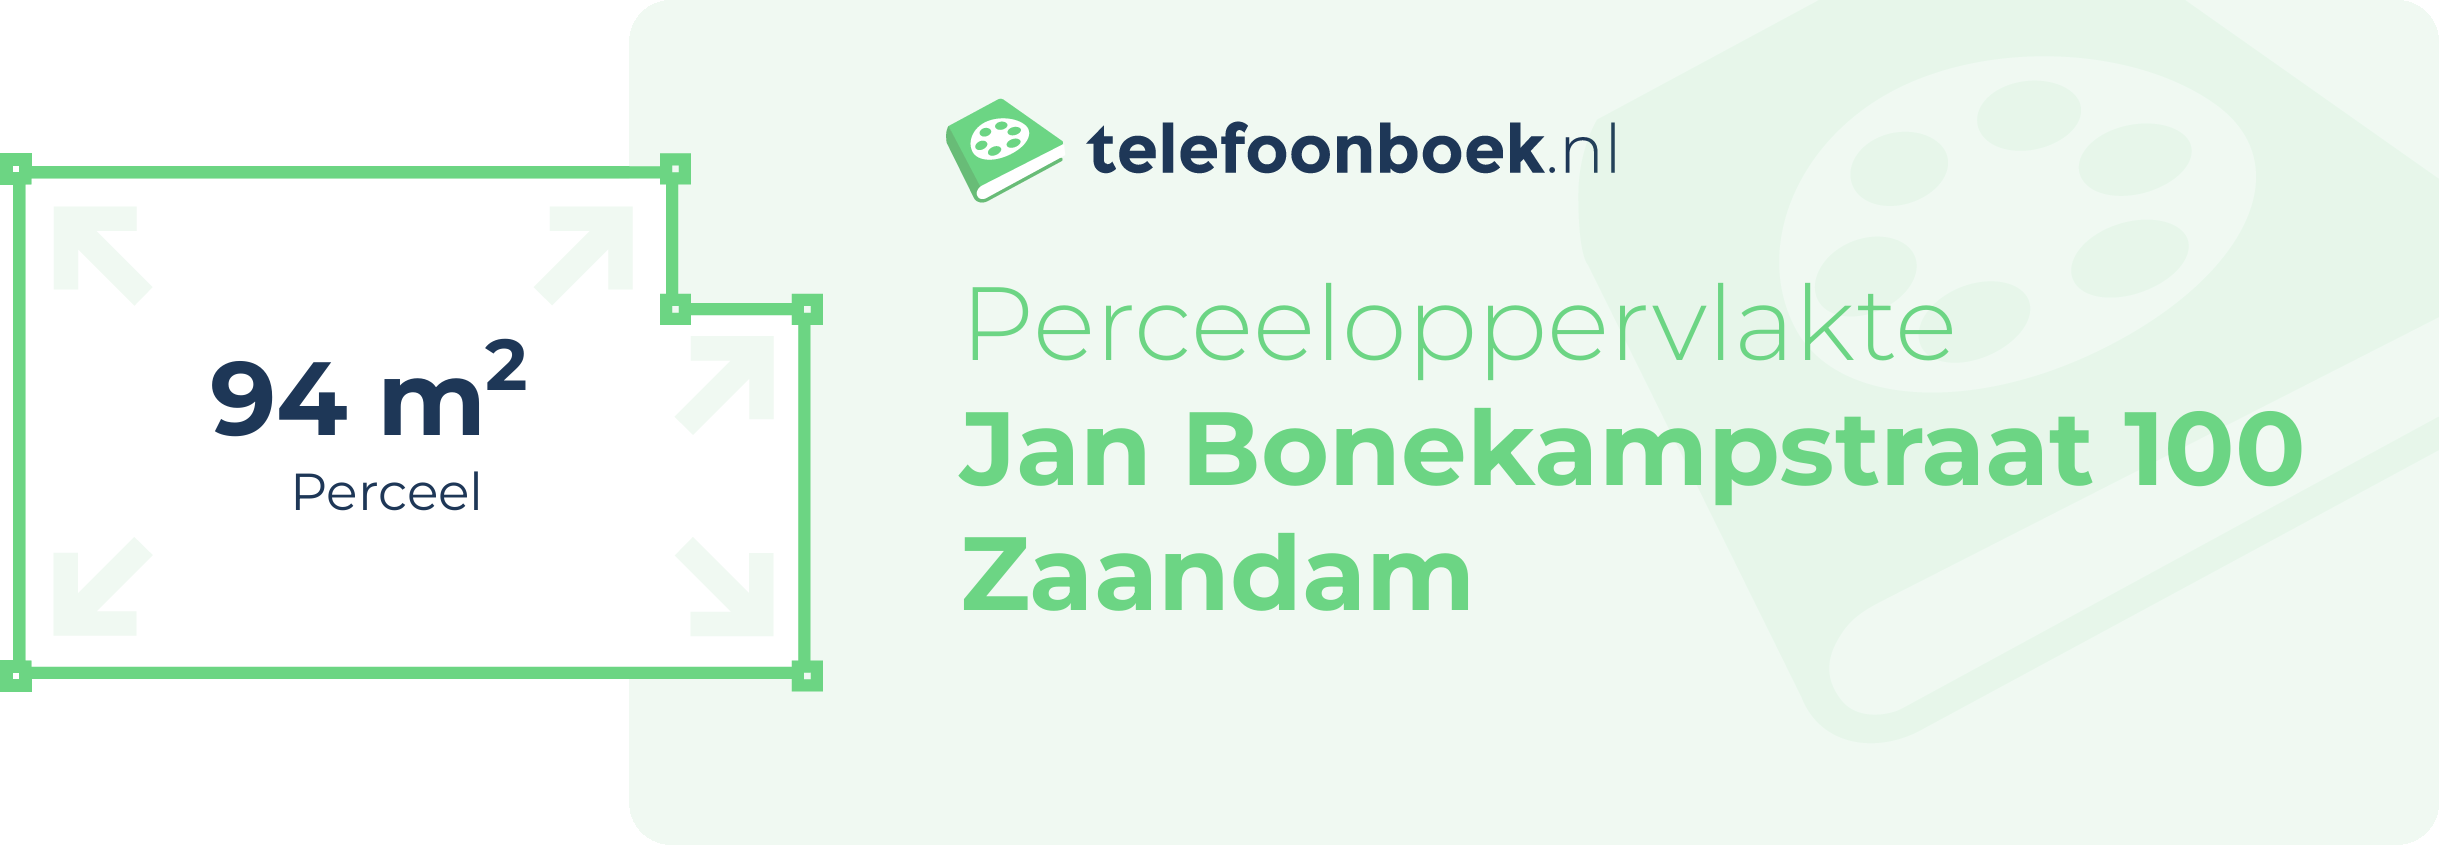 Perceeloppervlakte Jan Bonekampstraat 100 Zaandam